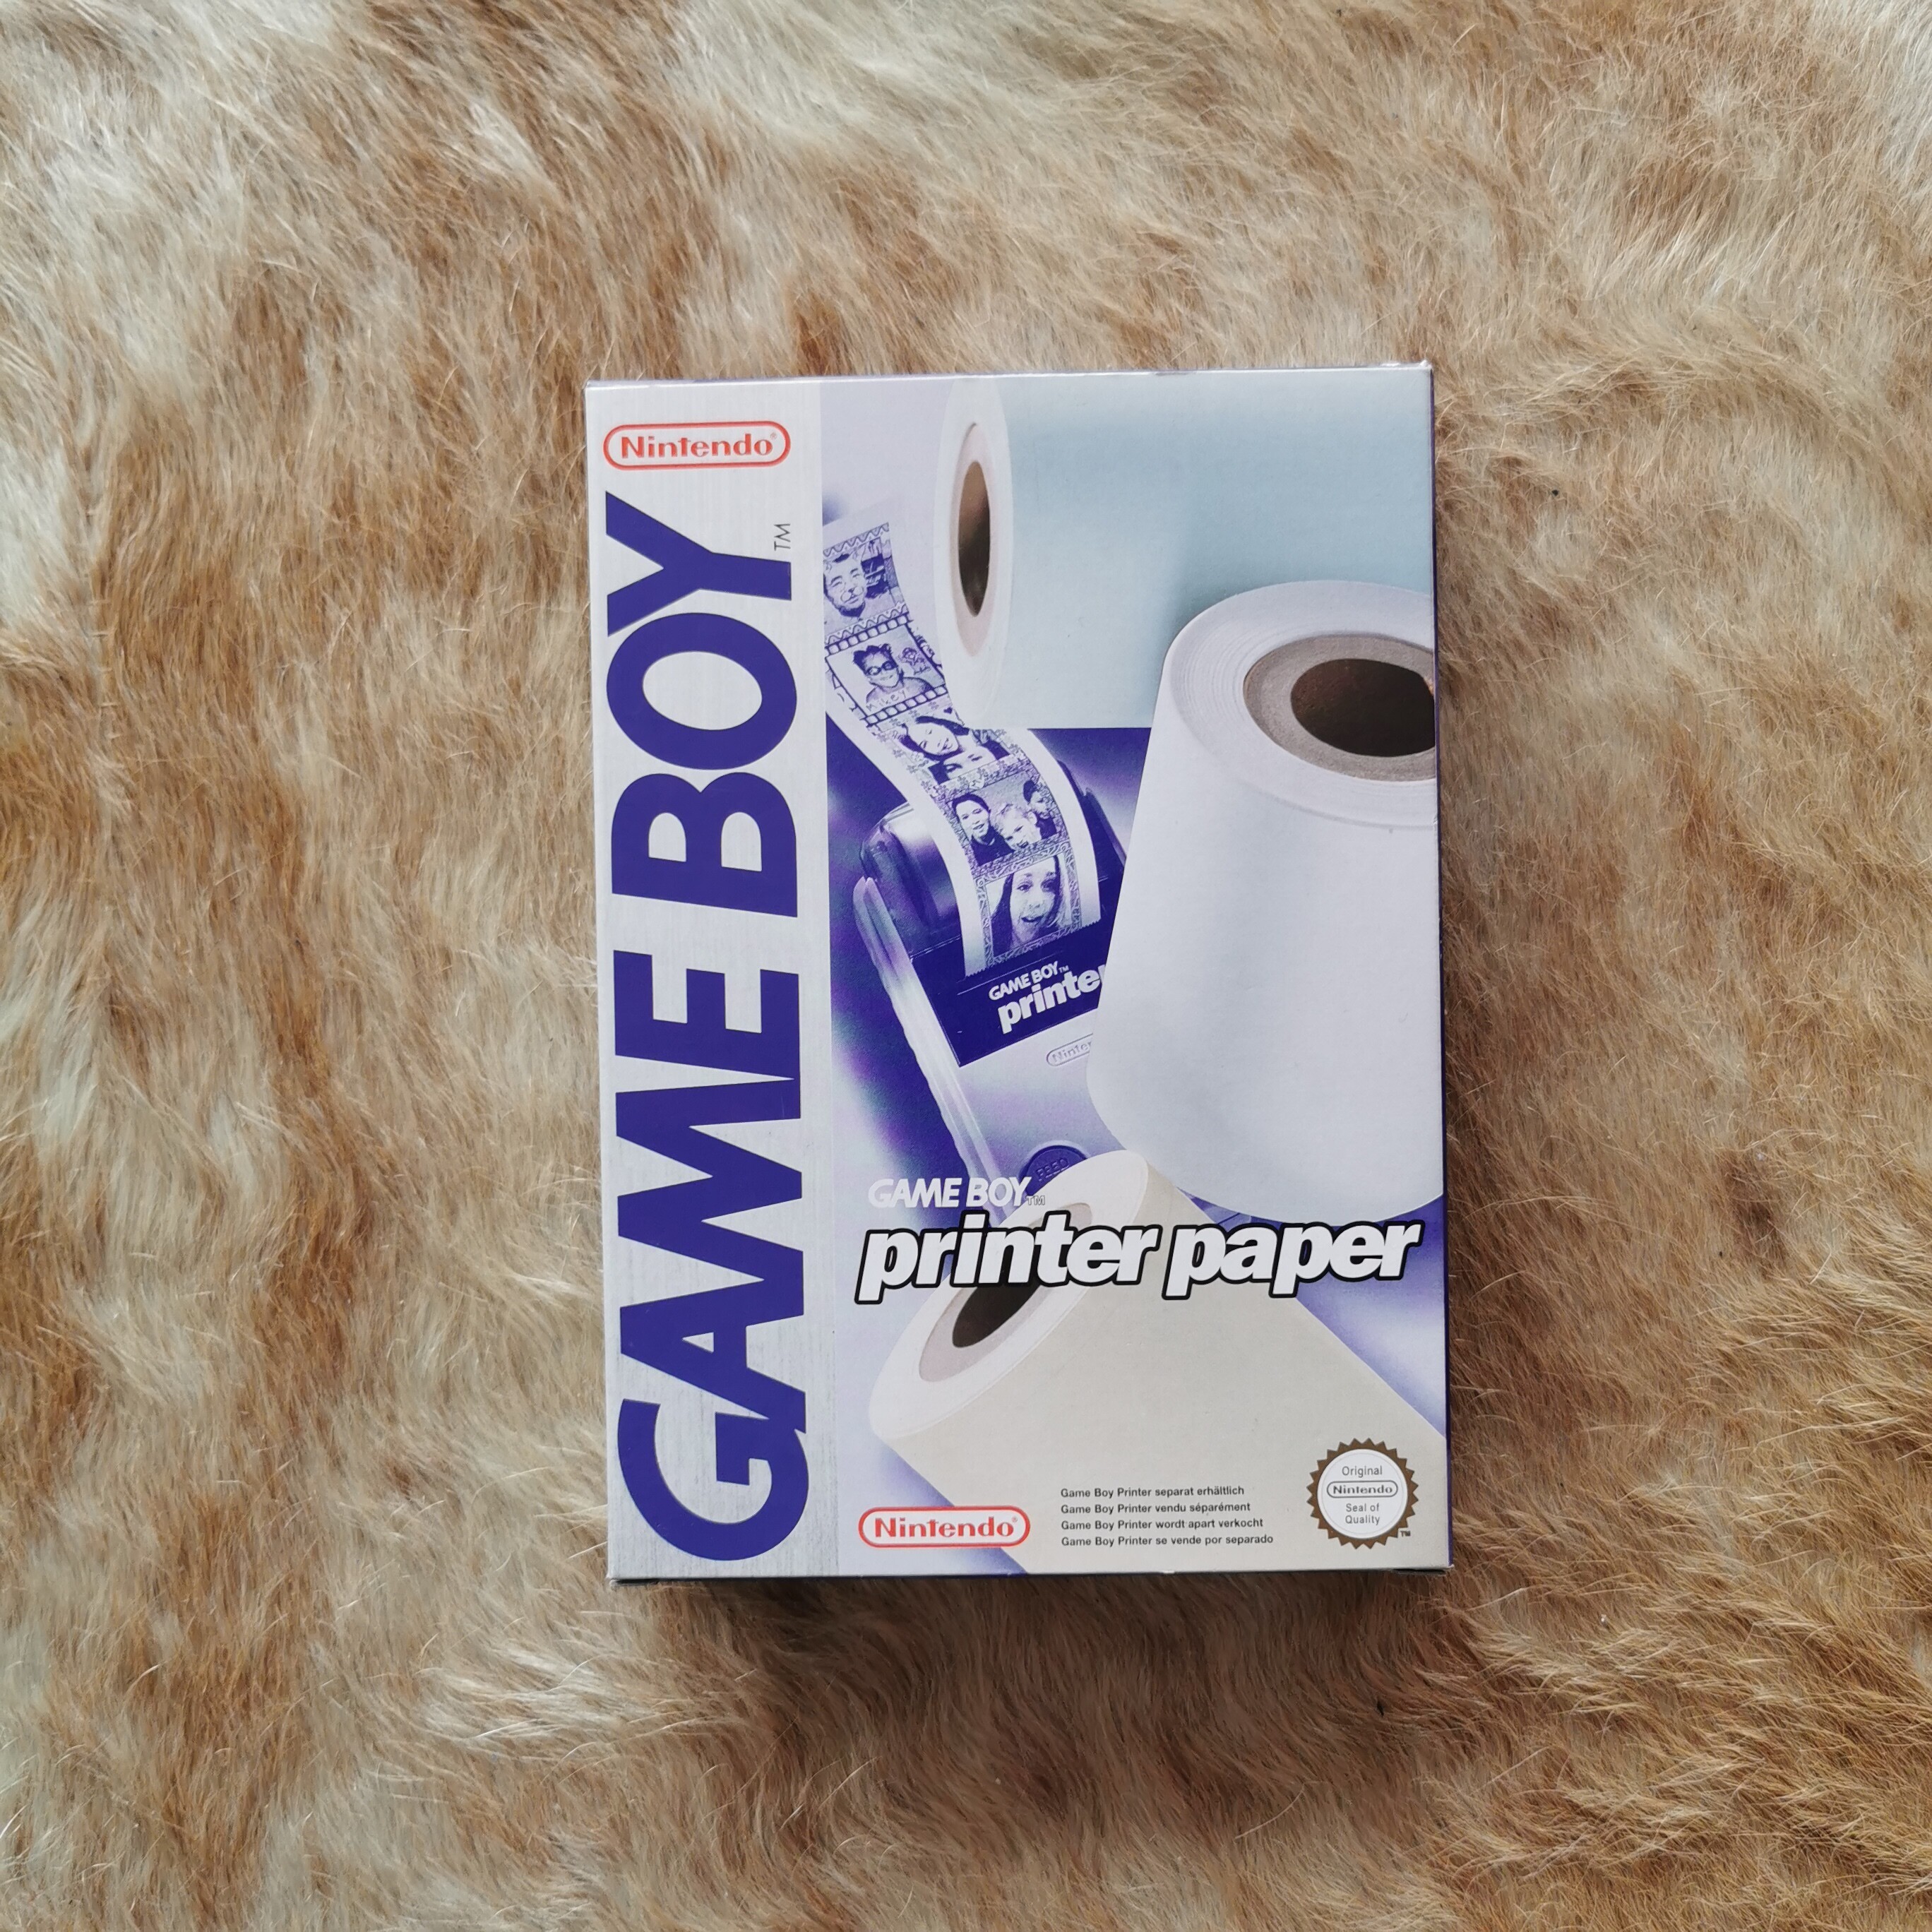  Nintendo Game Boy Printer Paper Big Box [EU]